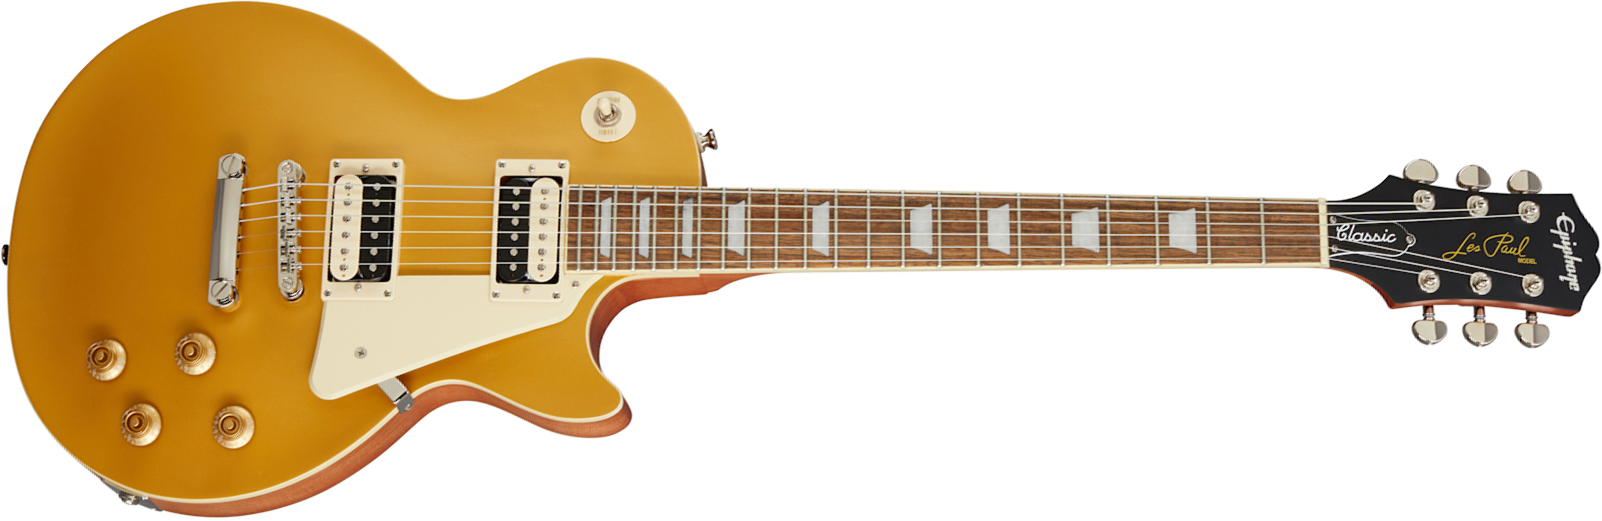 Epiphone Les Paul Classic Worn 2020 Hh Ht Rw - Worn Metallic Gold - Single cut electric guitar - Main picture